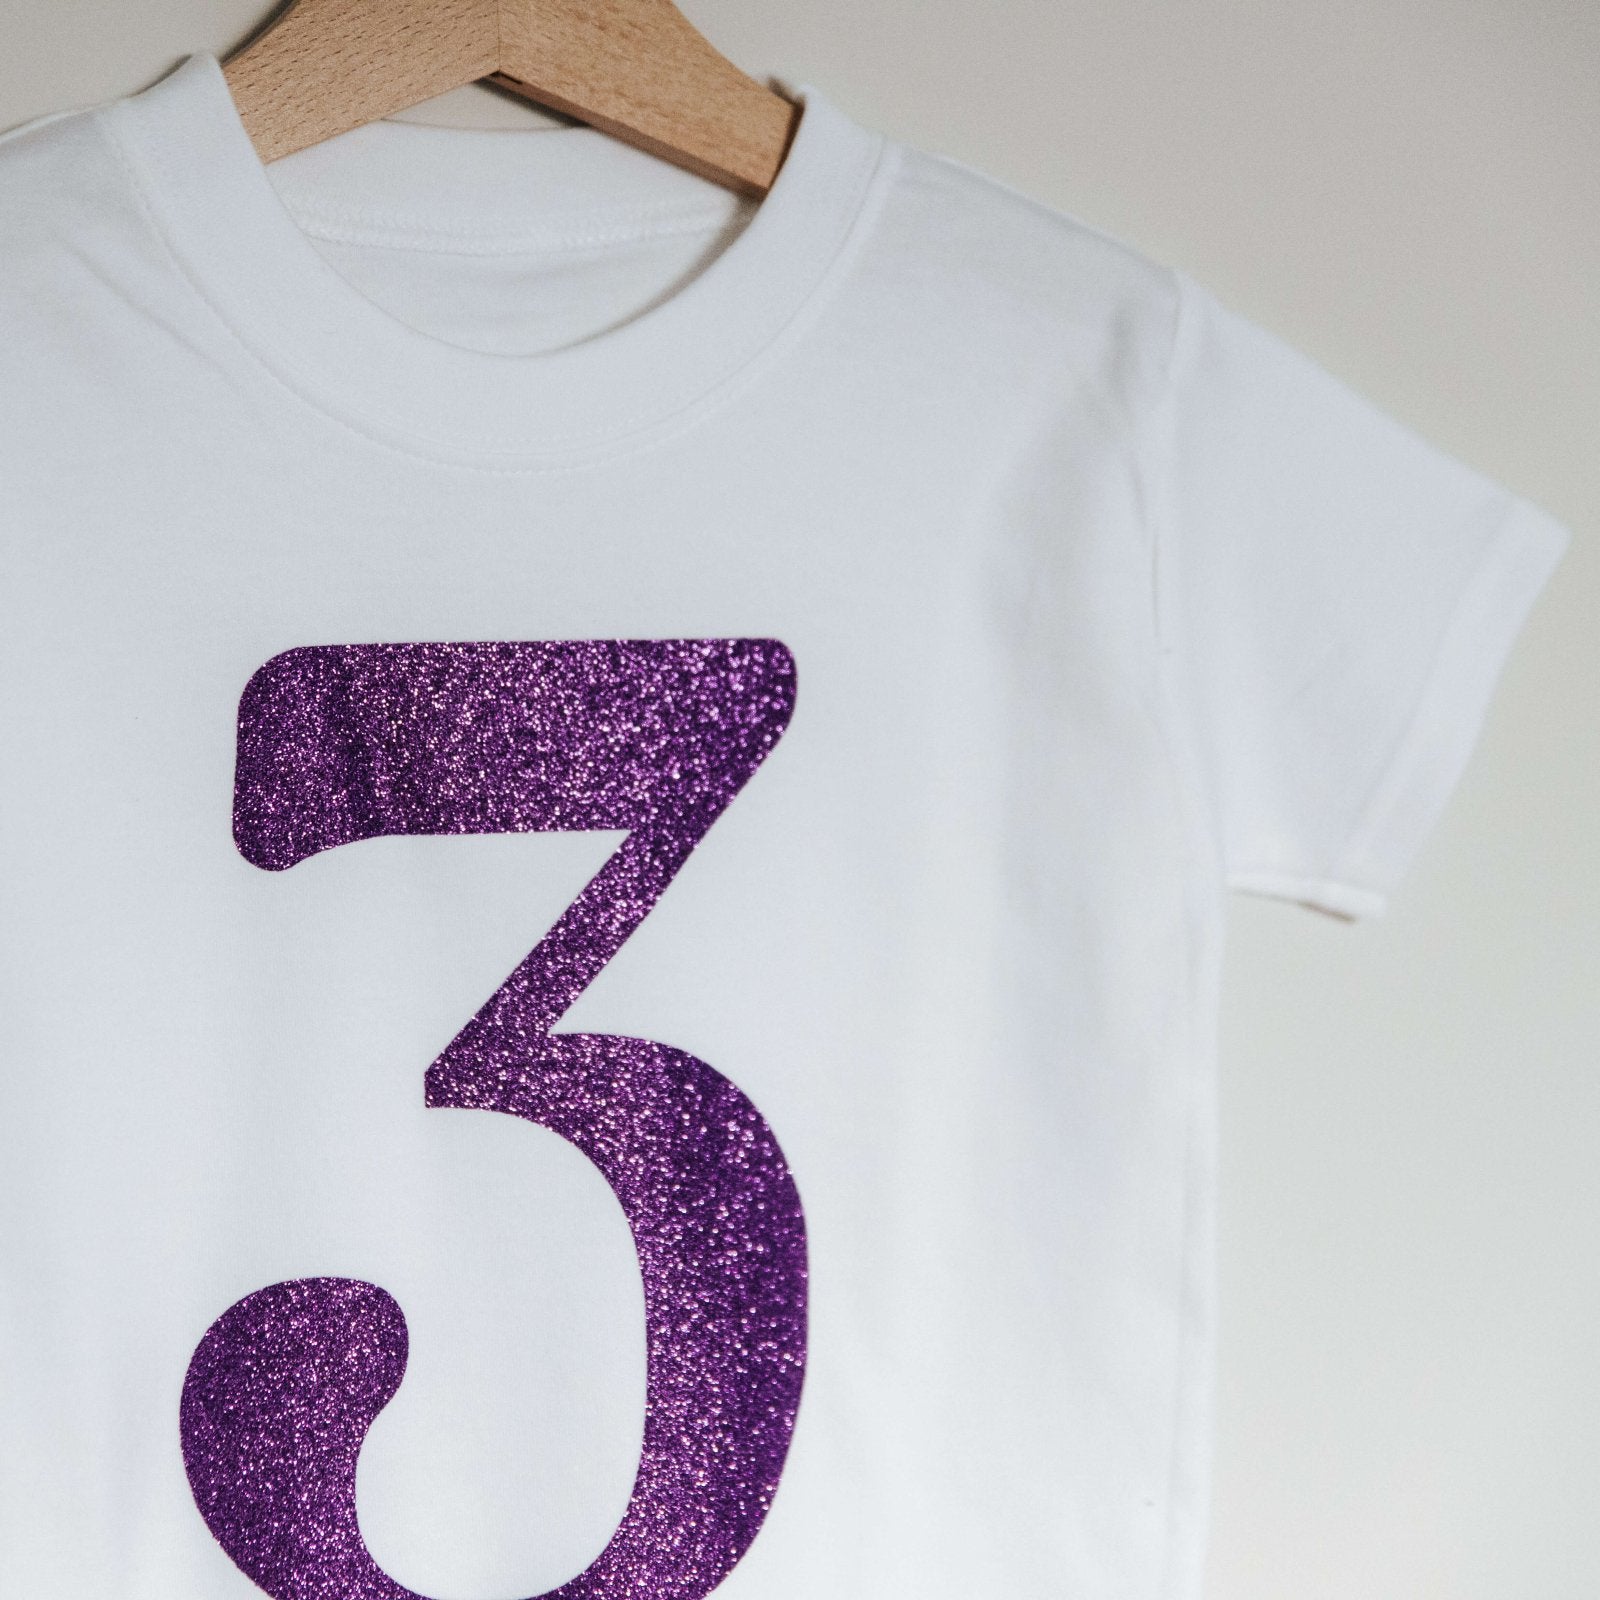 Glitter Number or Initial Children's Birthday T-Shirt - I am Nat Ltd - Children's T-Shirt